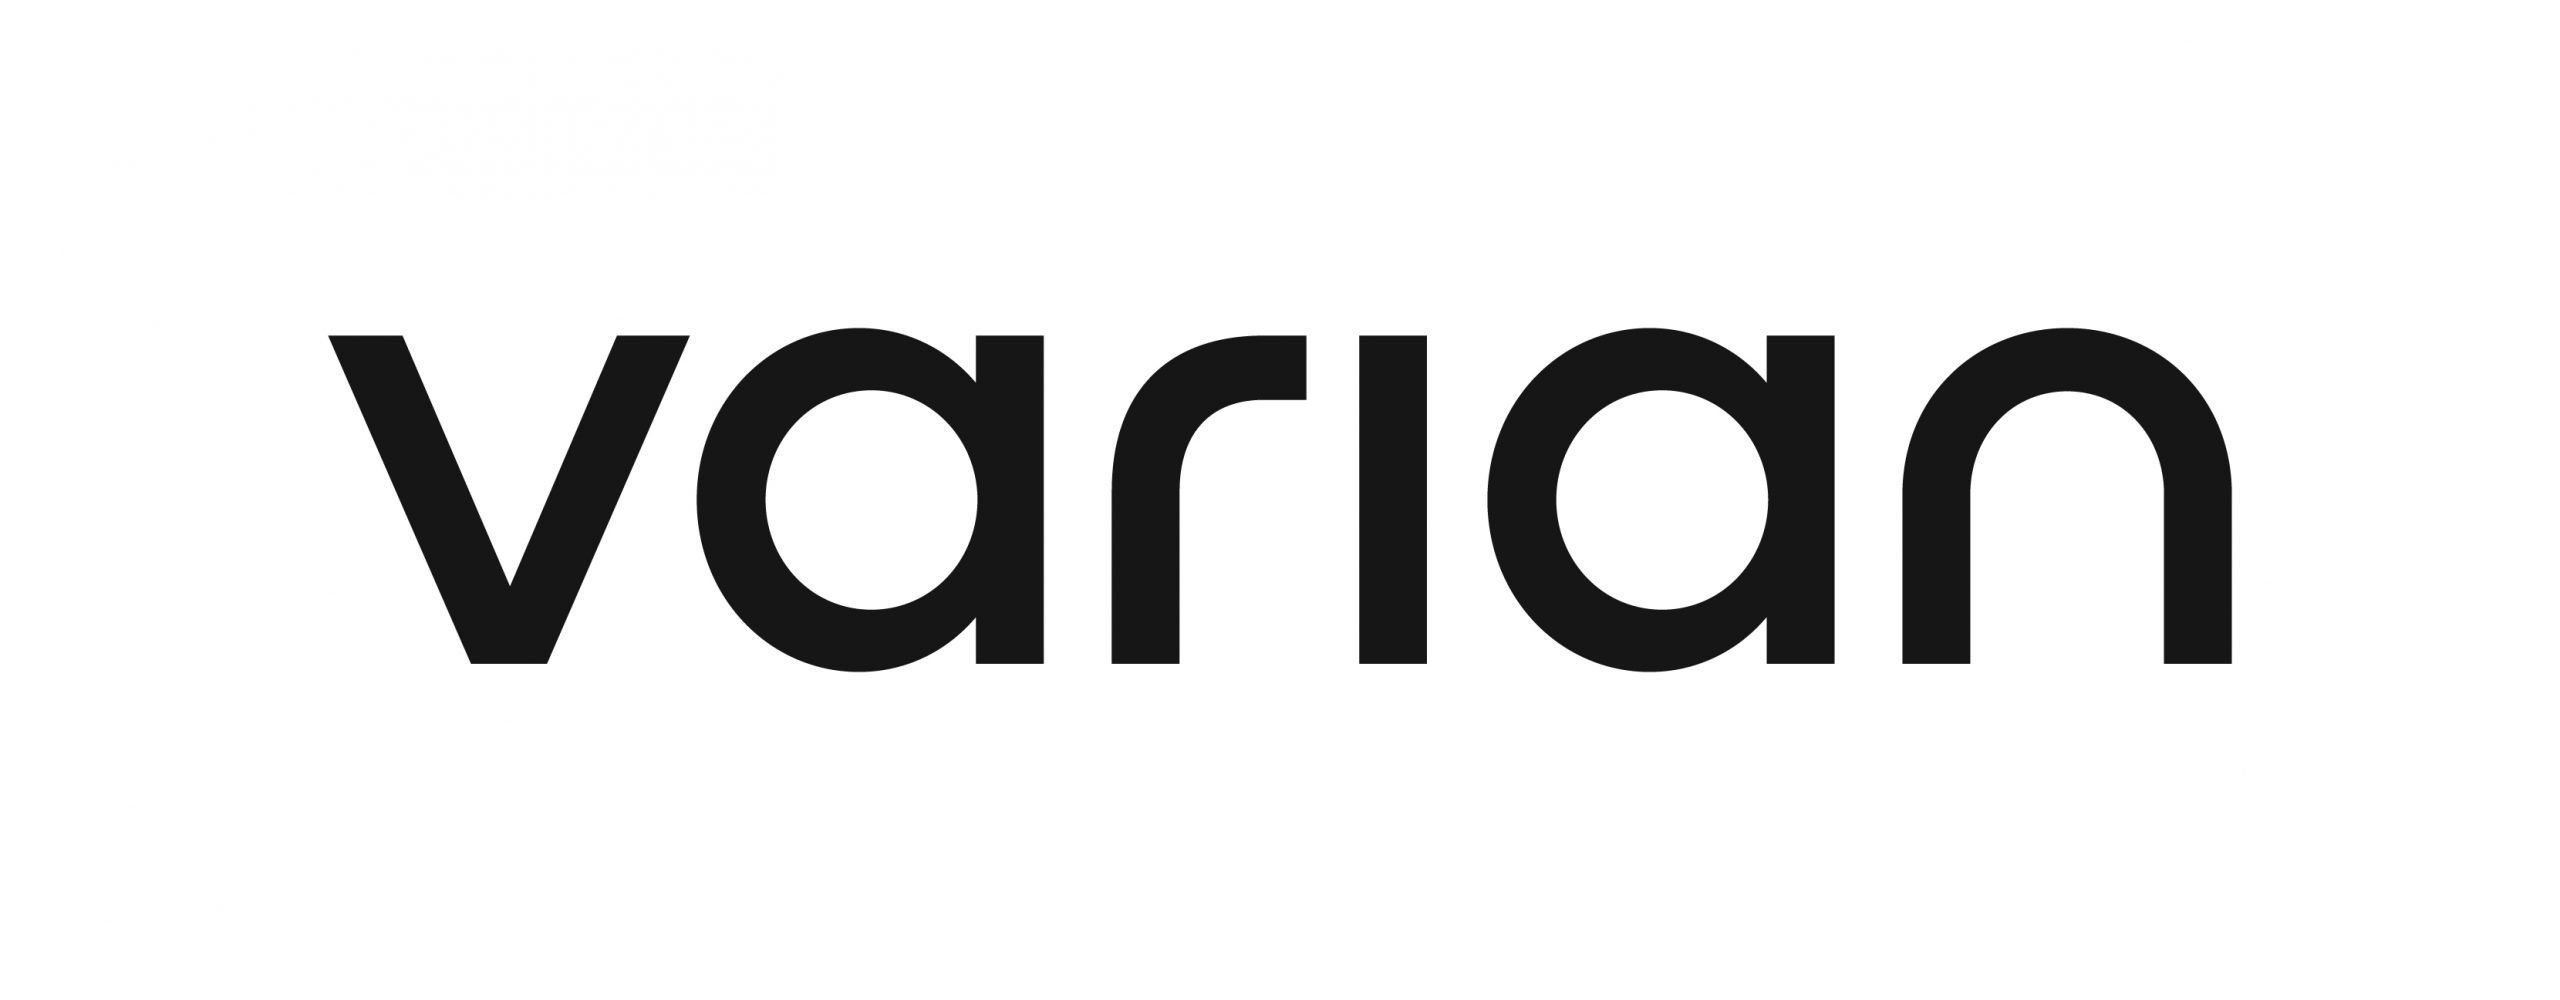 Varian Final logo